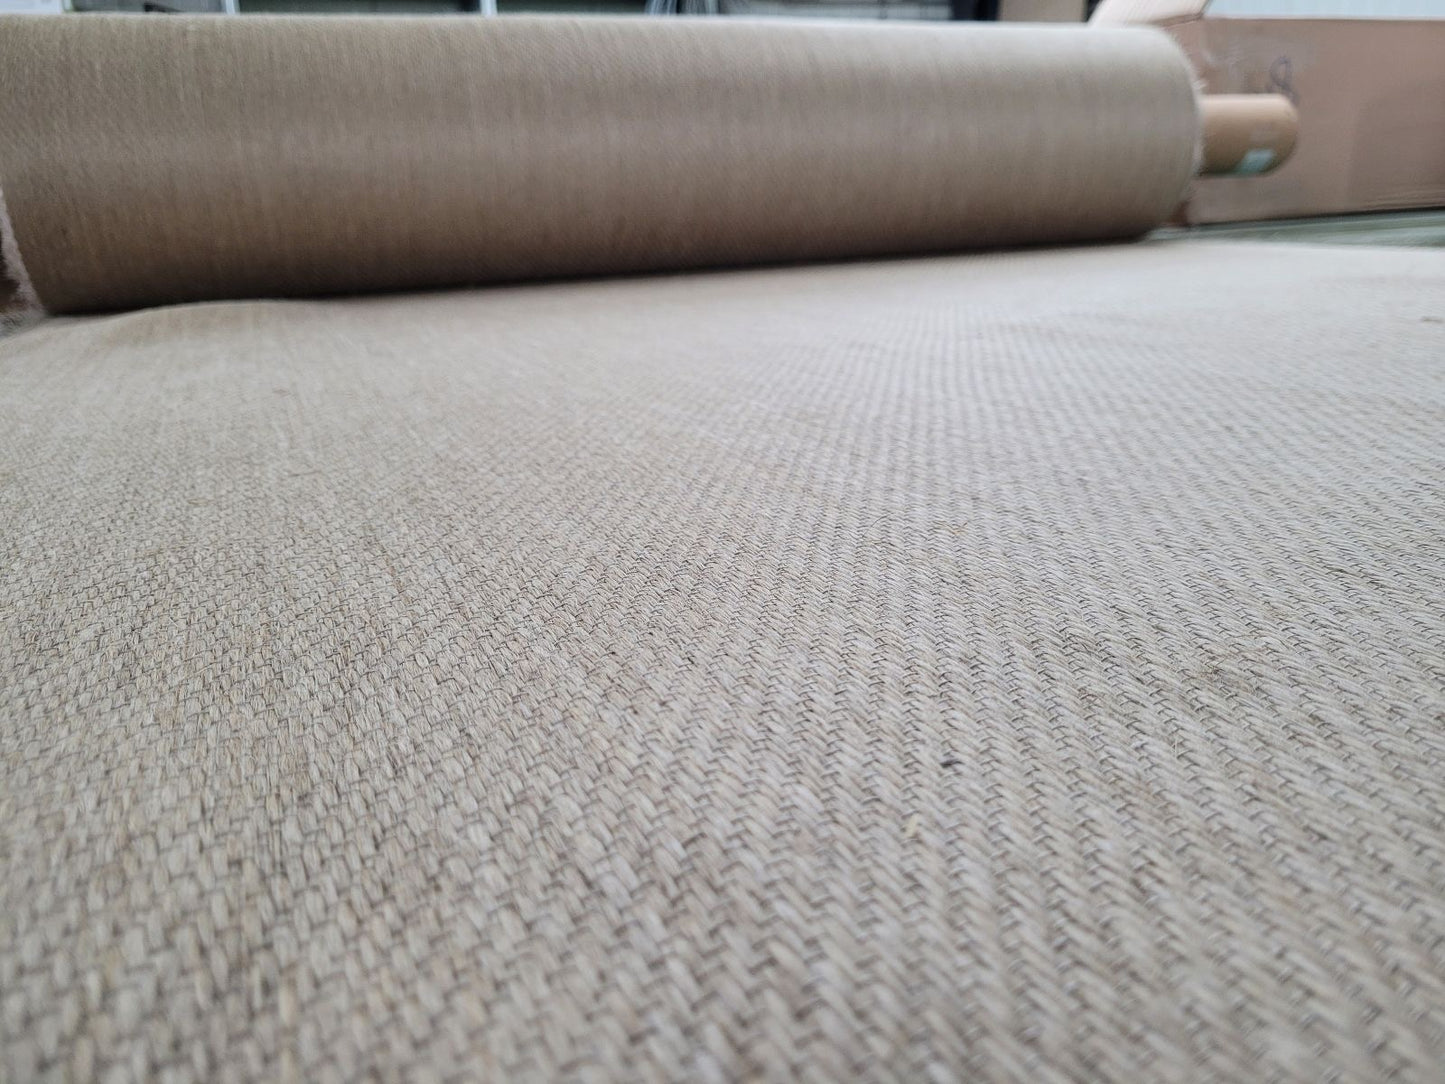 Unidirectional Flax Fabric